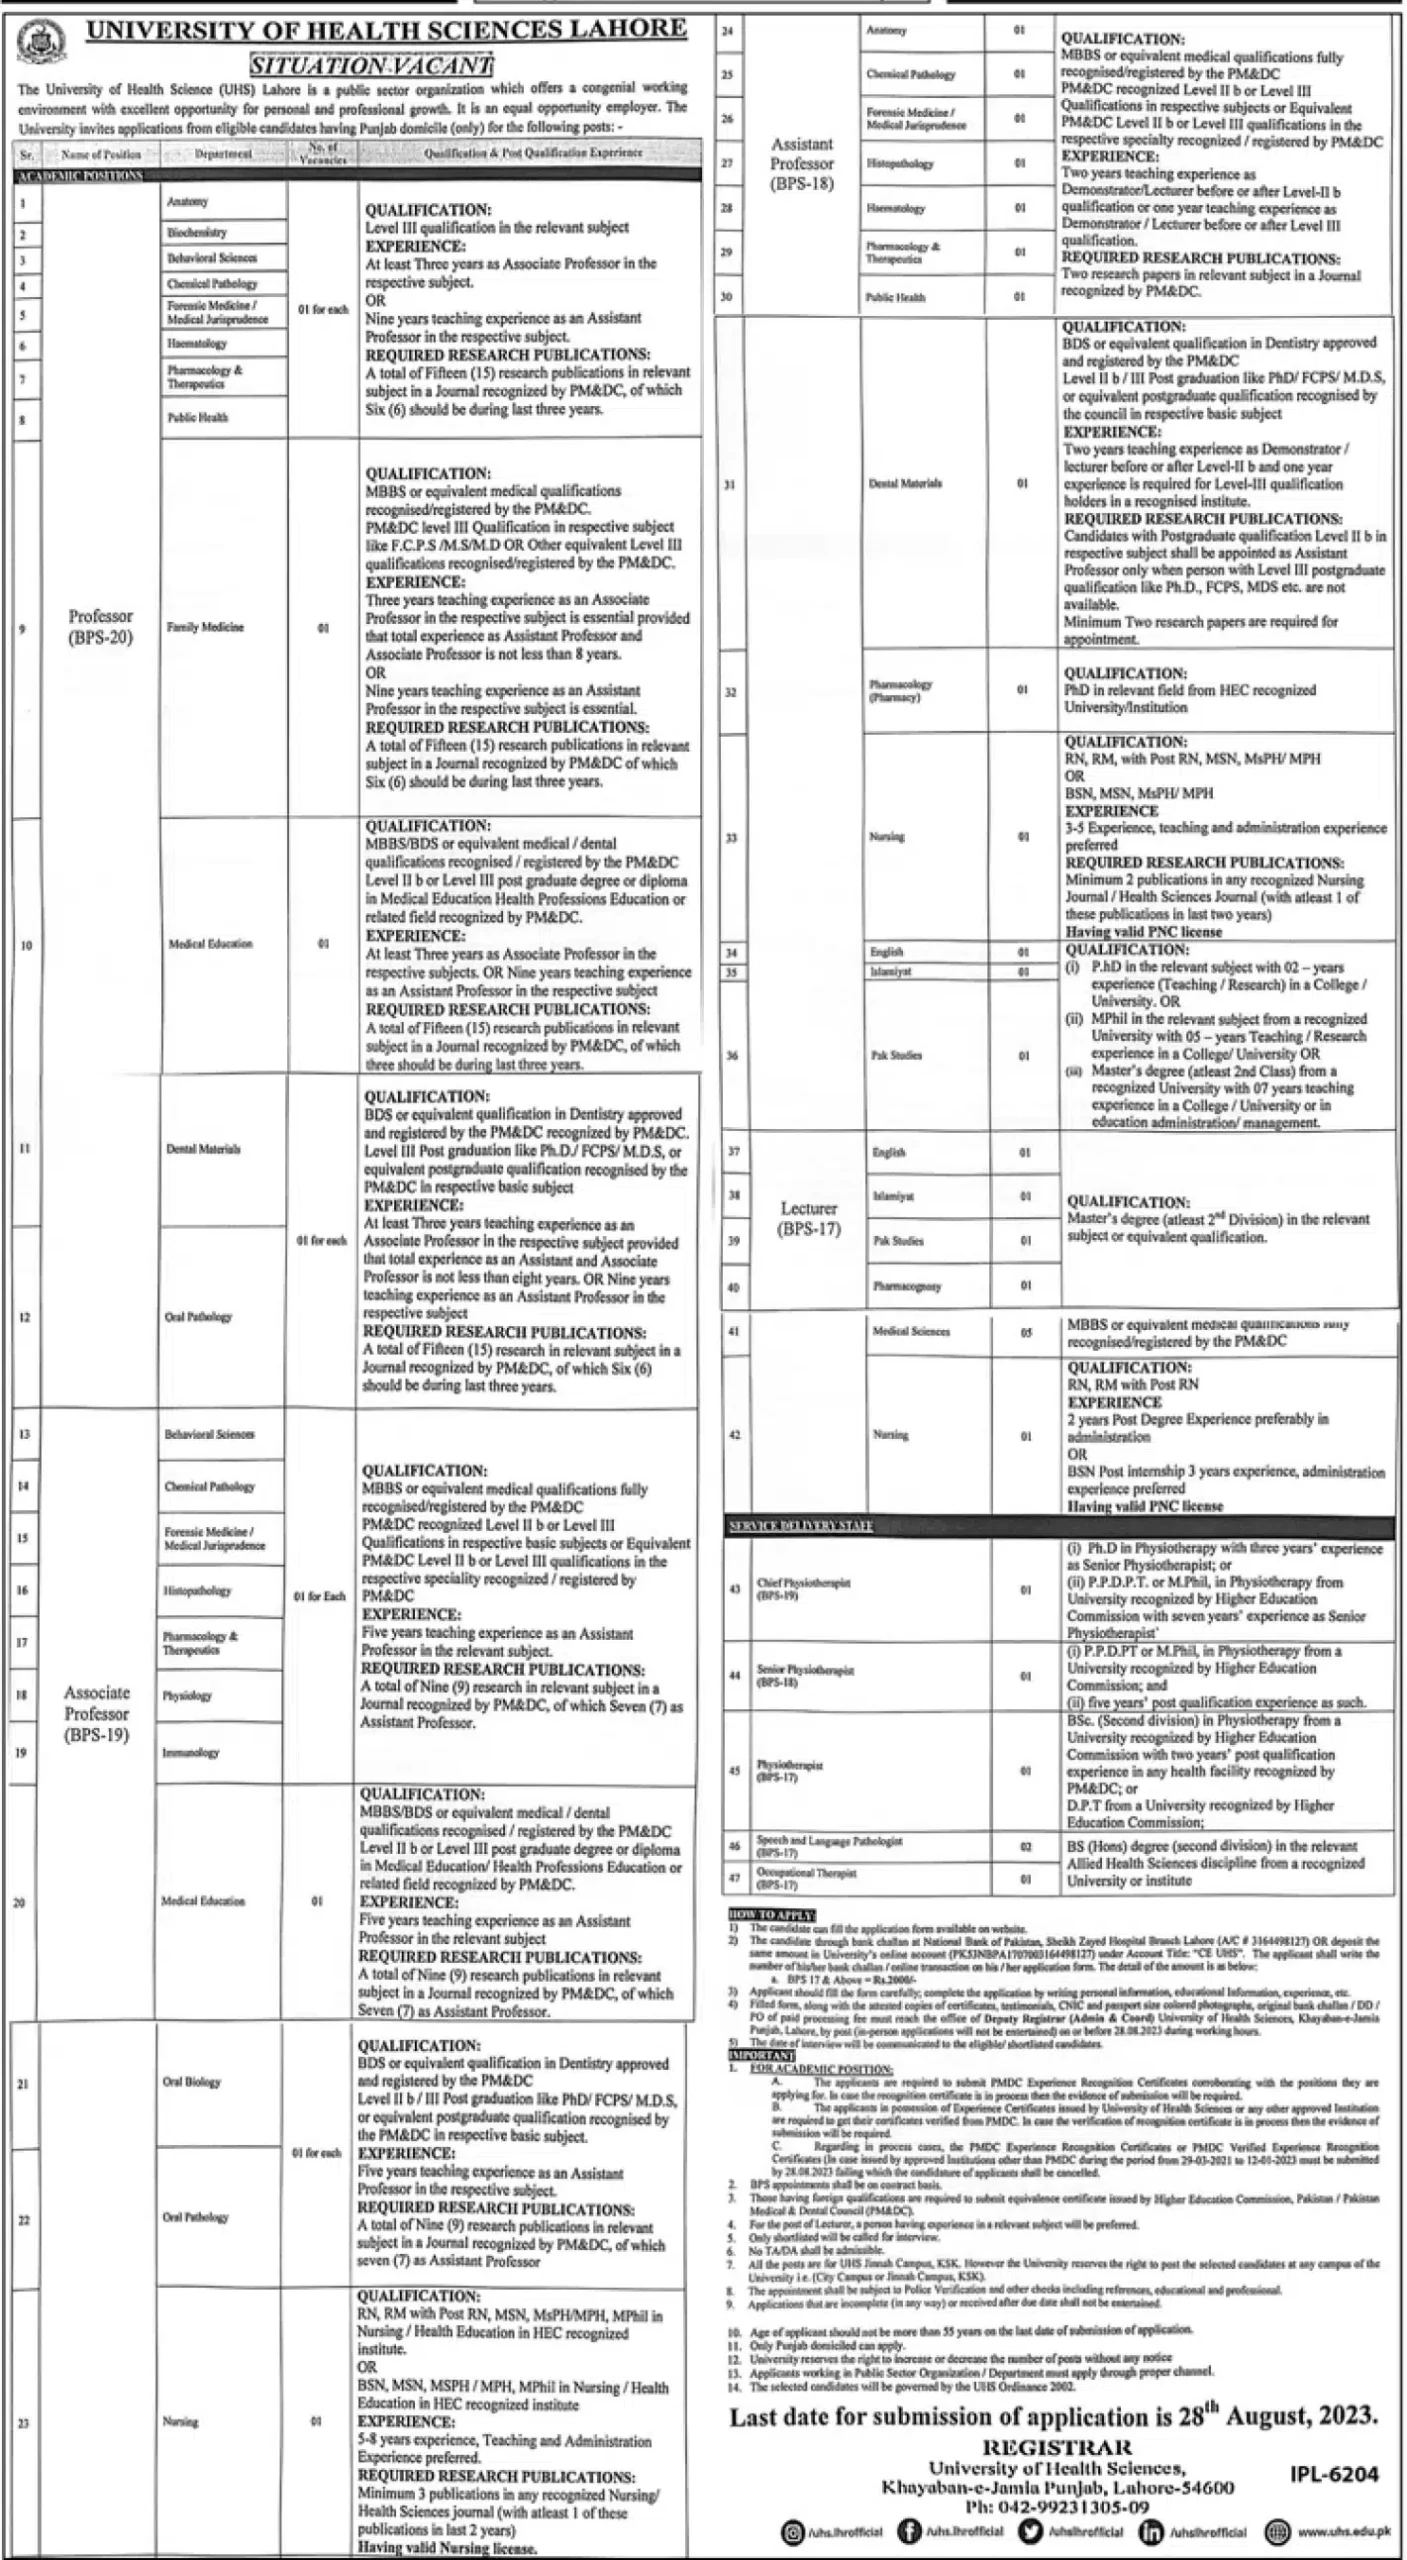 University of Health Sciences Lahore jobs 2023